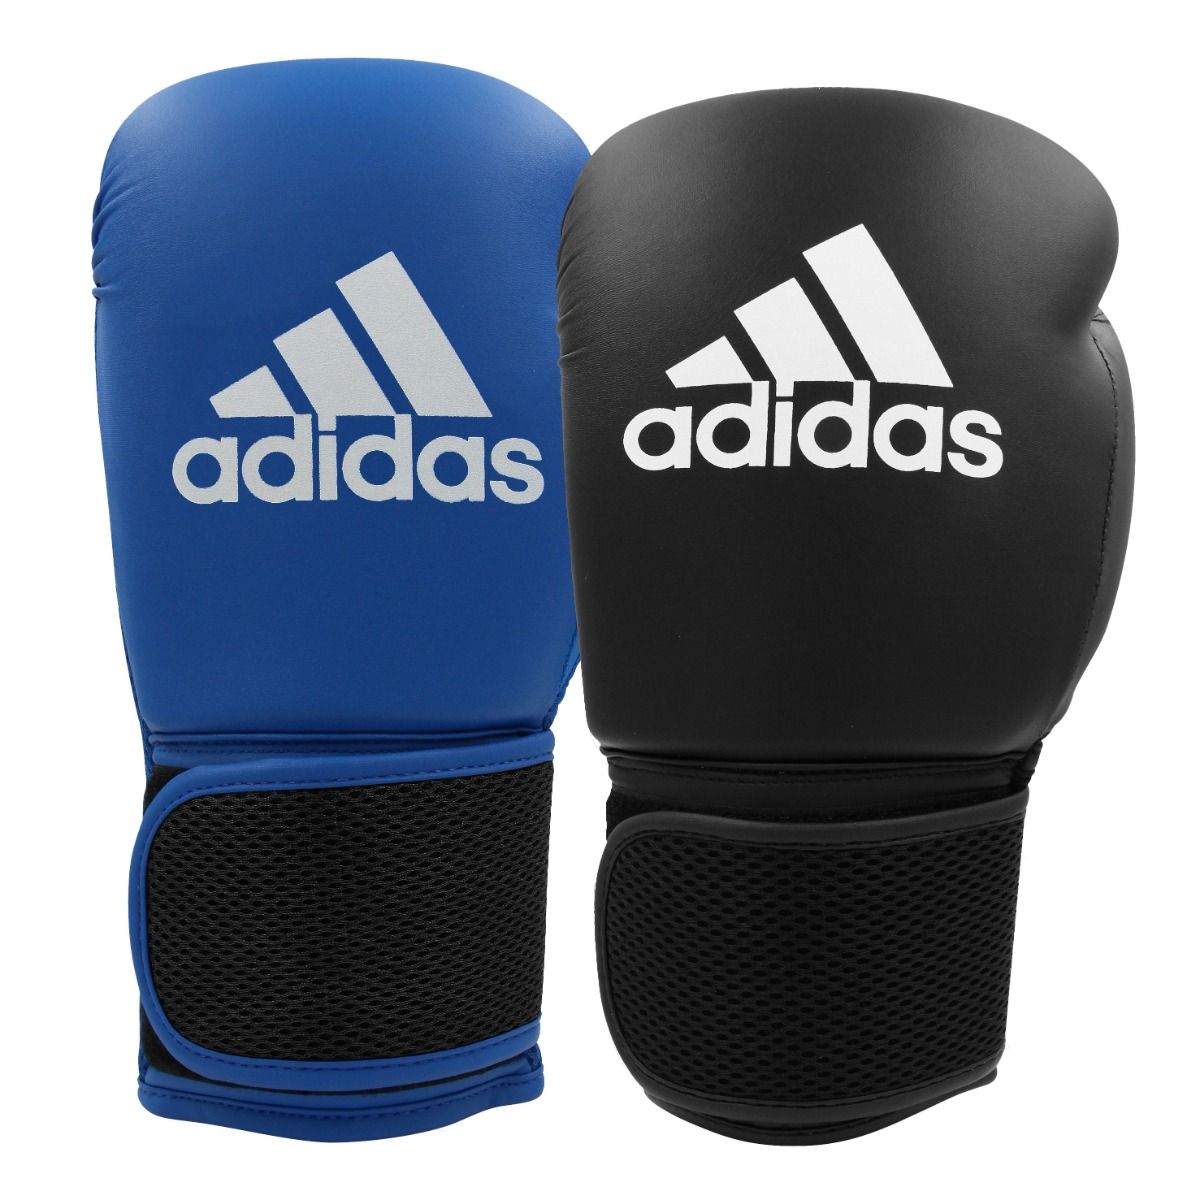 25 adidas Hybrid Gloves Boxing